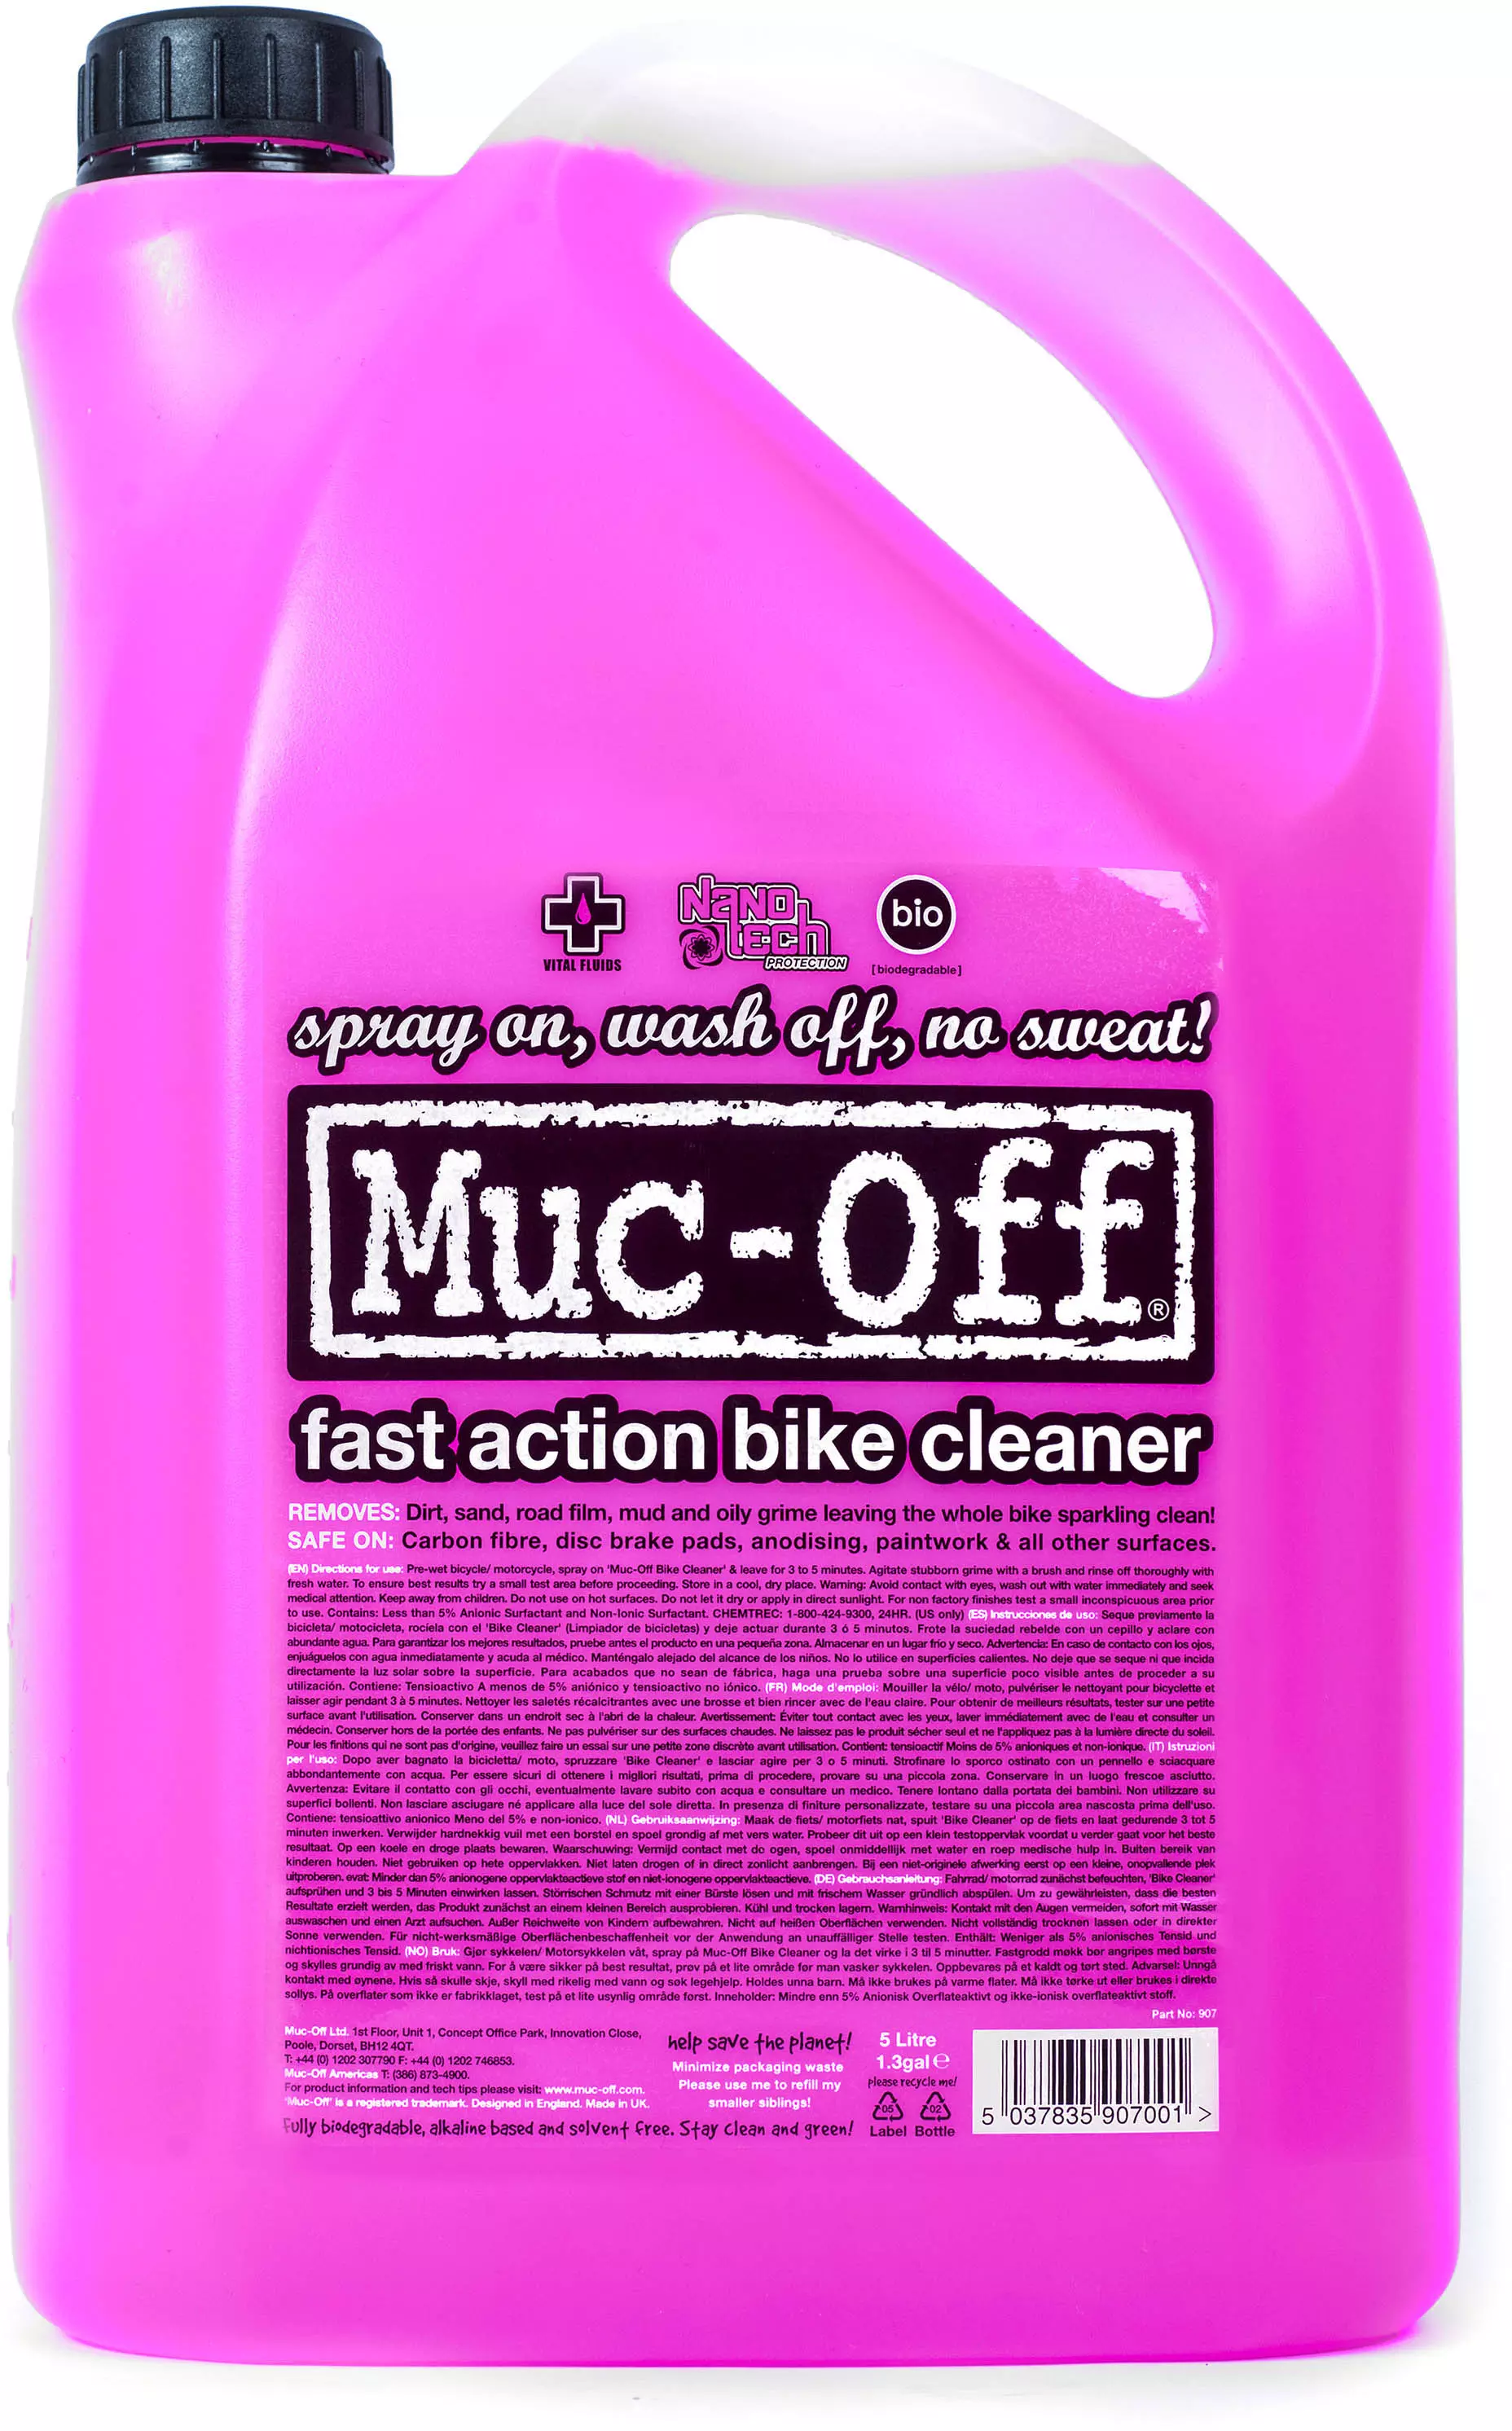 muc off bike spray